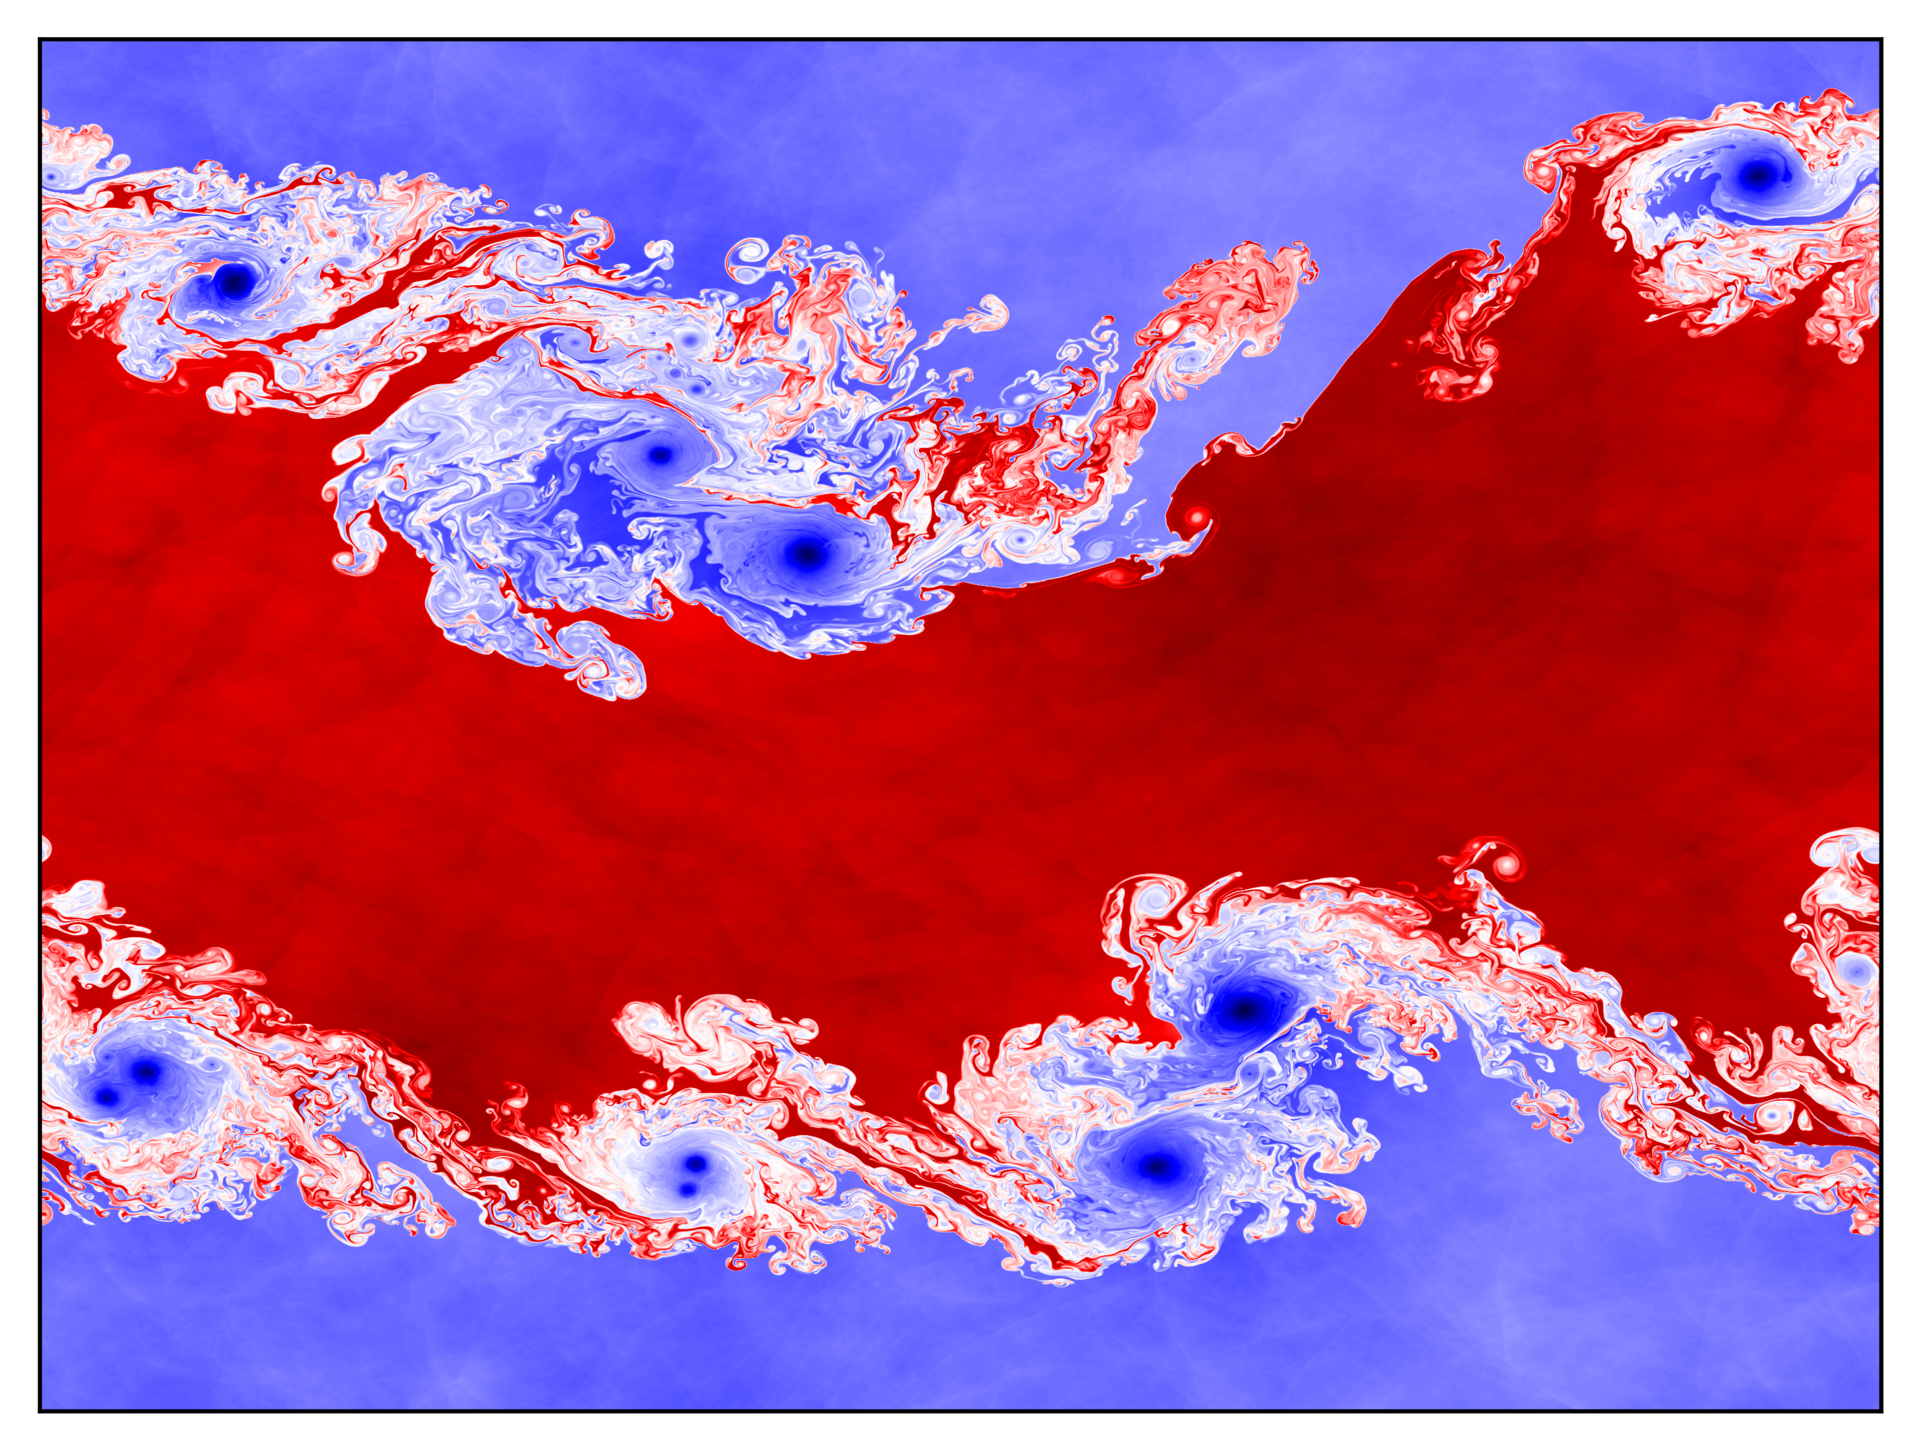 Simulation of turbulent gas flow. (Generated by Kjetil O. Lye.)